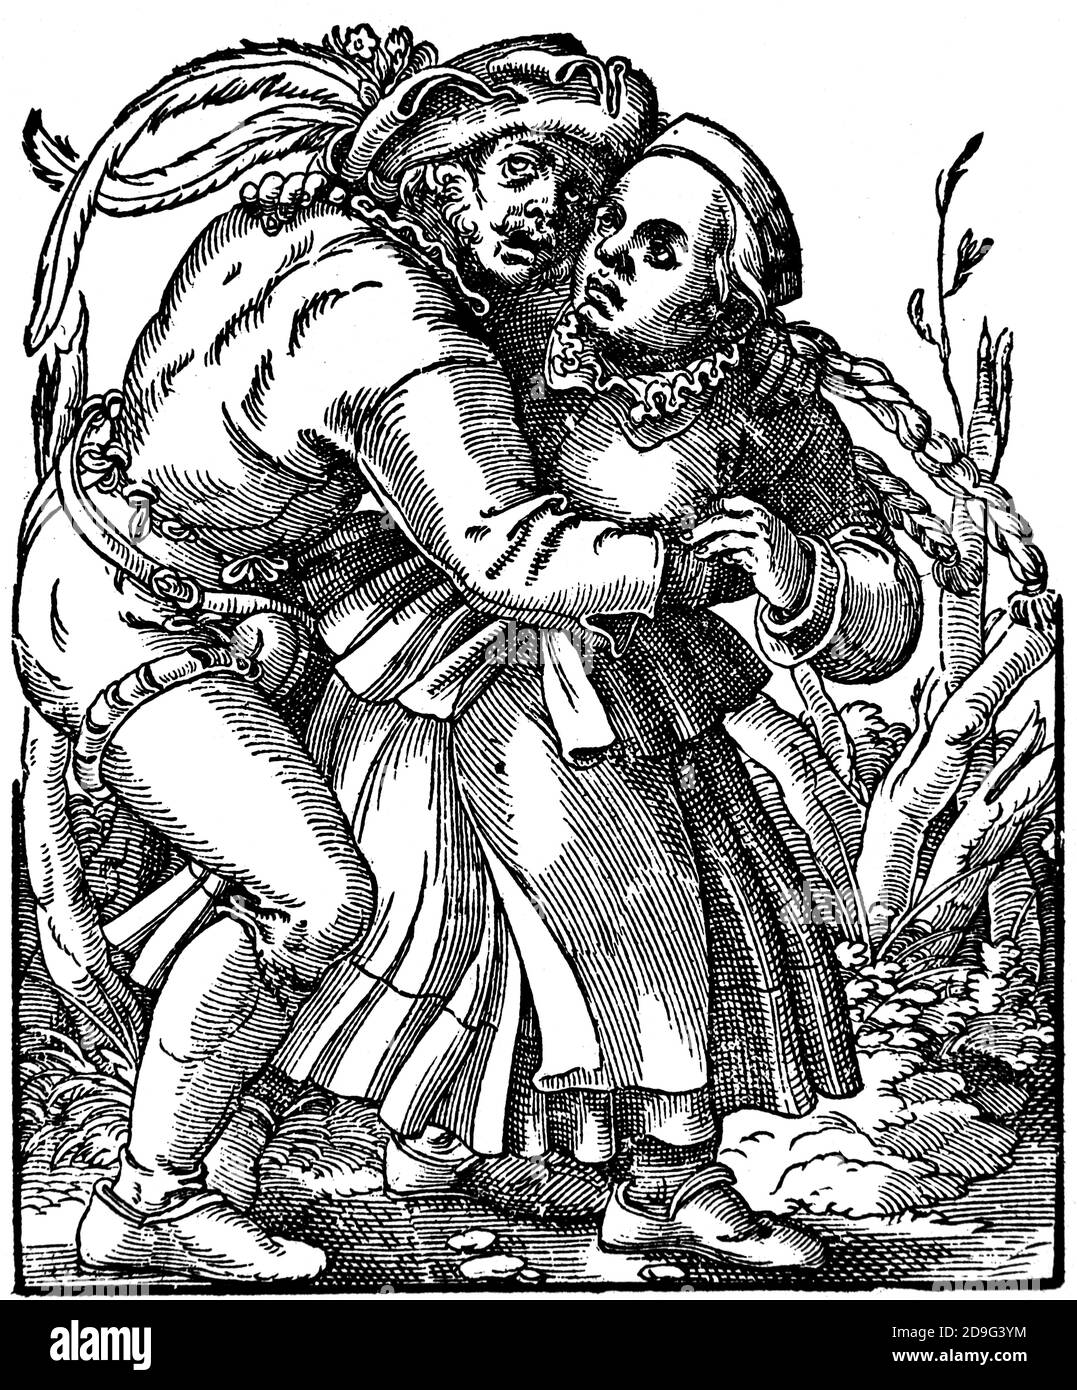 Europe. Renaissance era. 16th century. Peasant couple embracing. Engraving by Jost Amman, 1599. Stock Photo